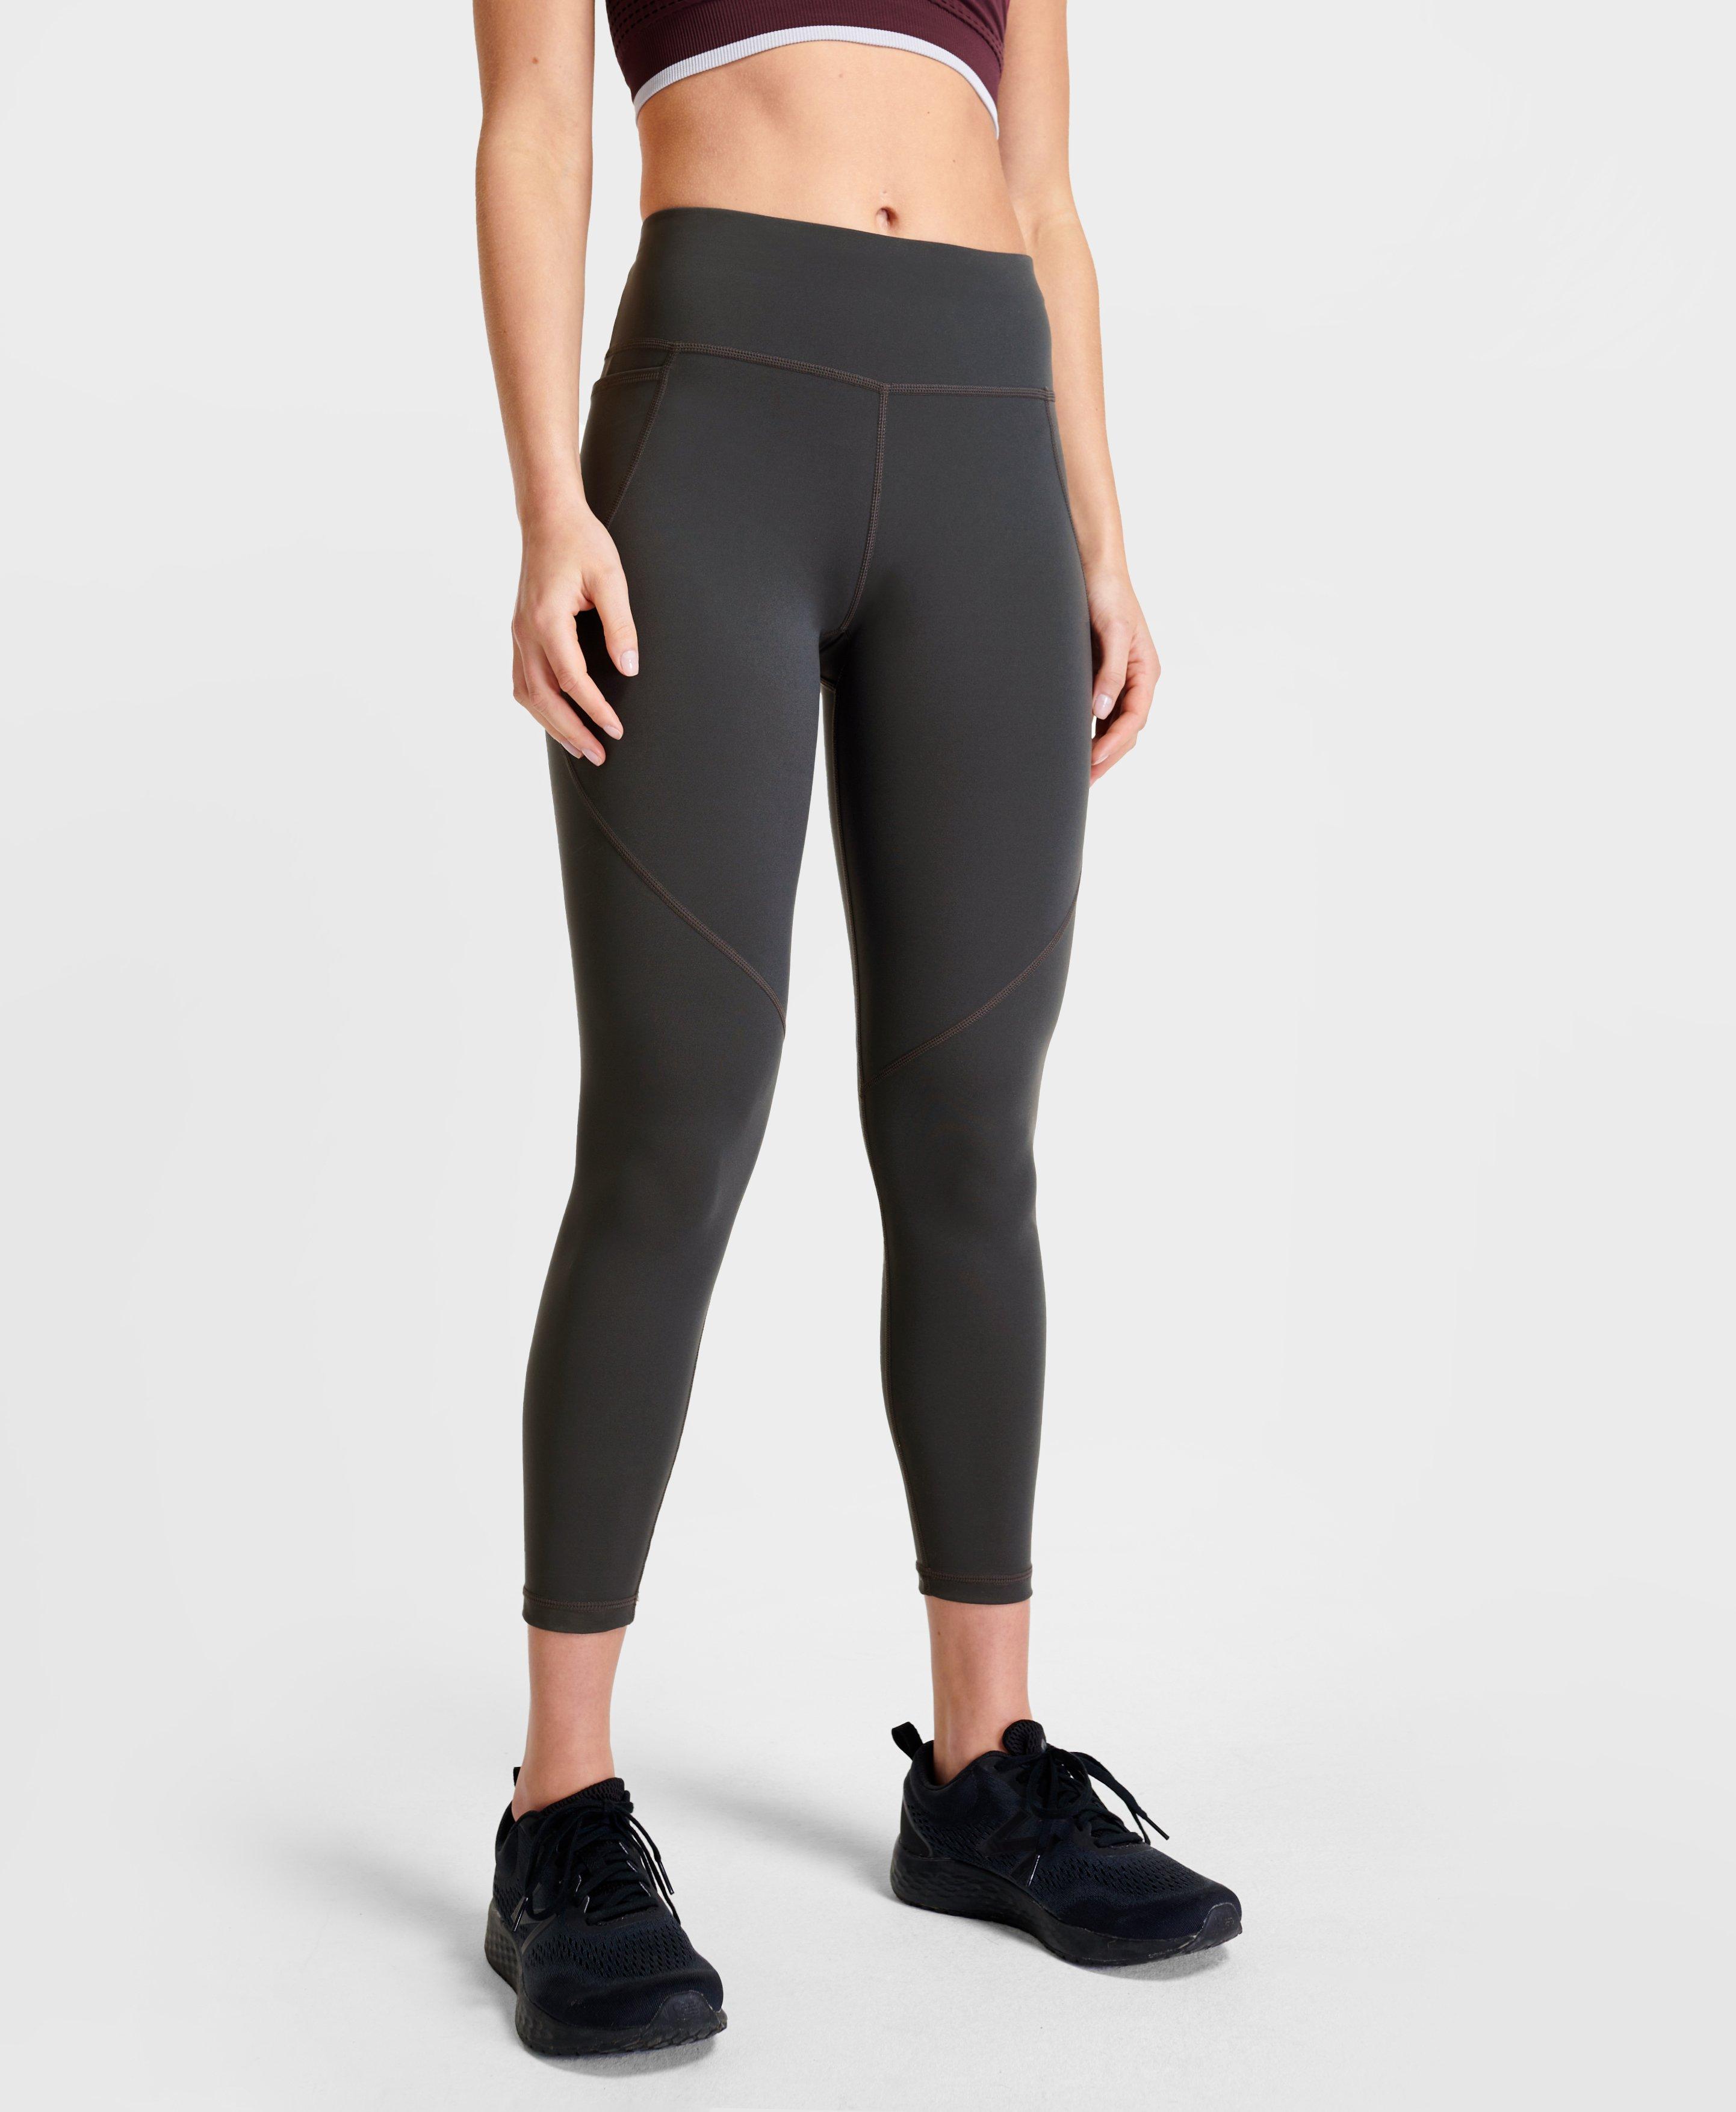 Liforme Yoga Mat, Slate Grey | Sweaty Betty